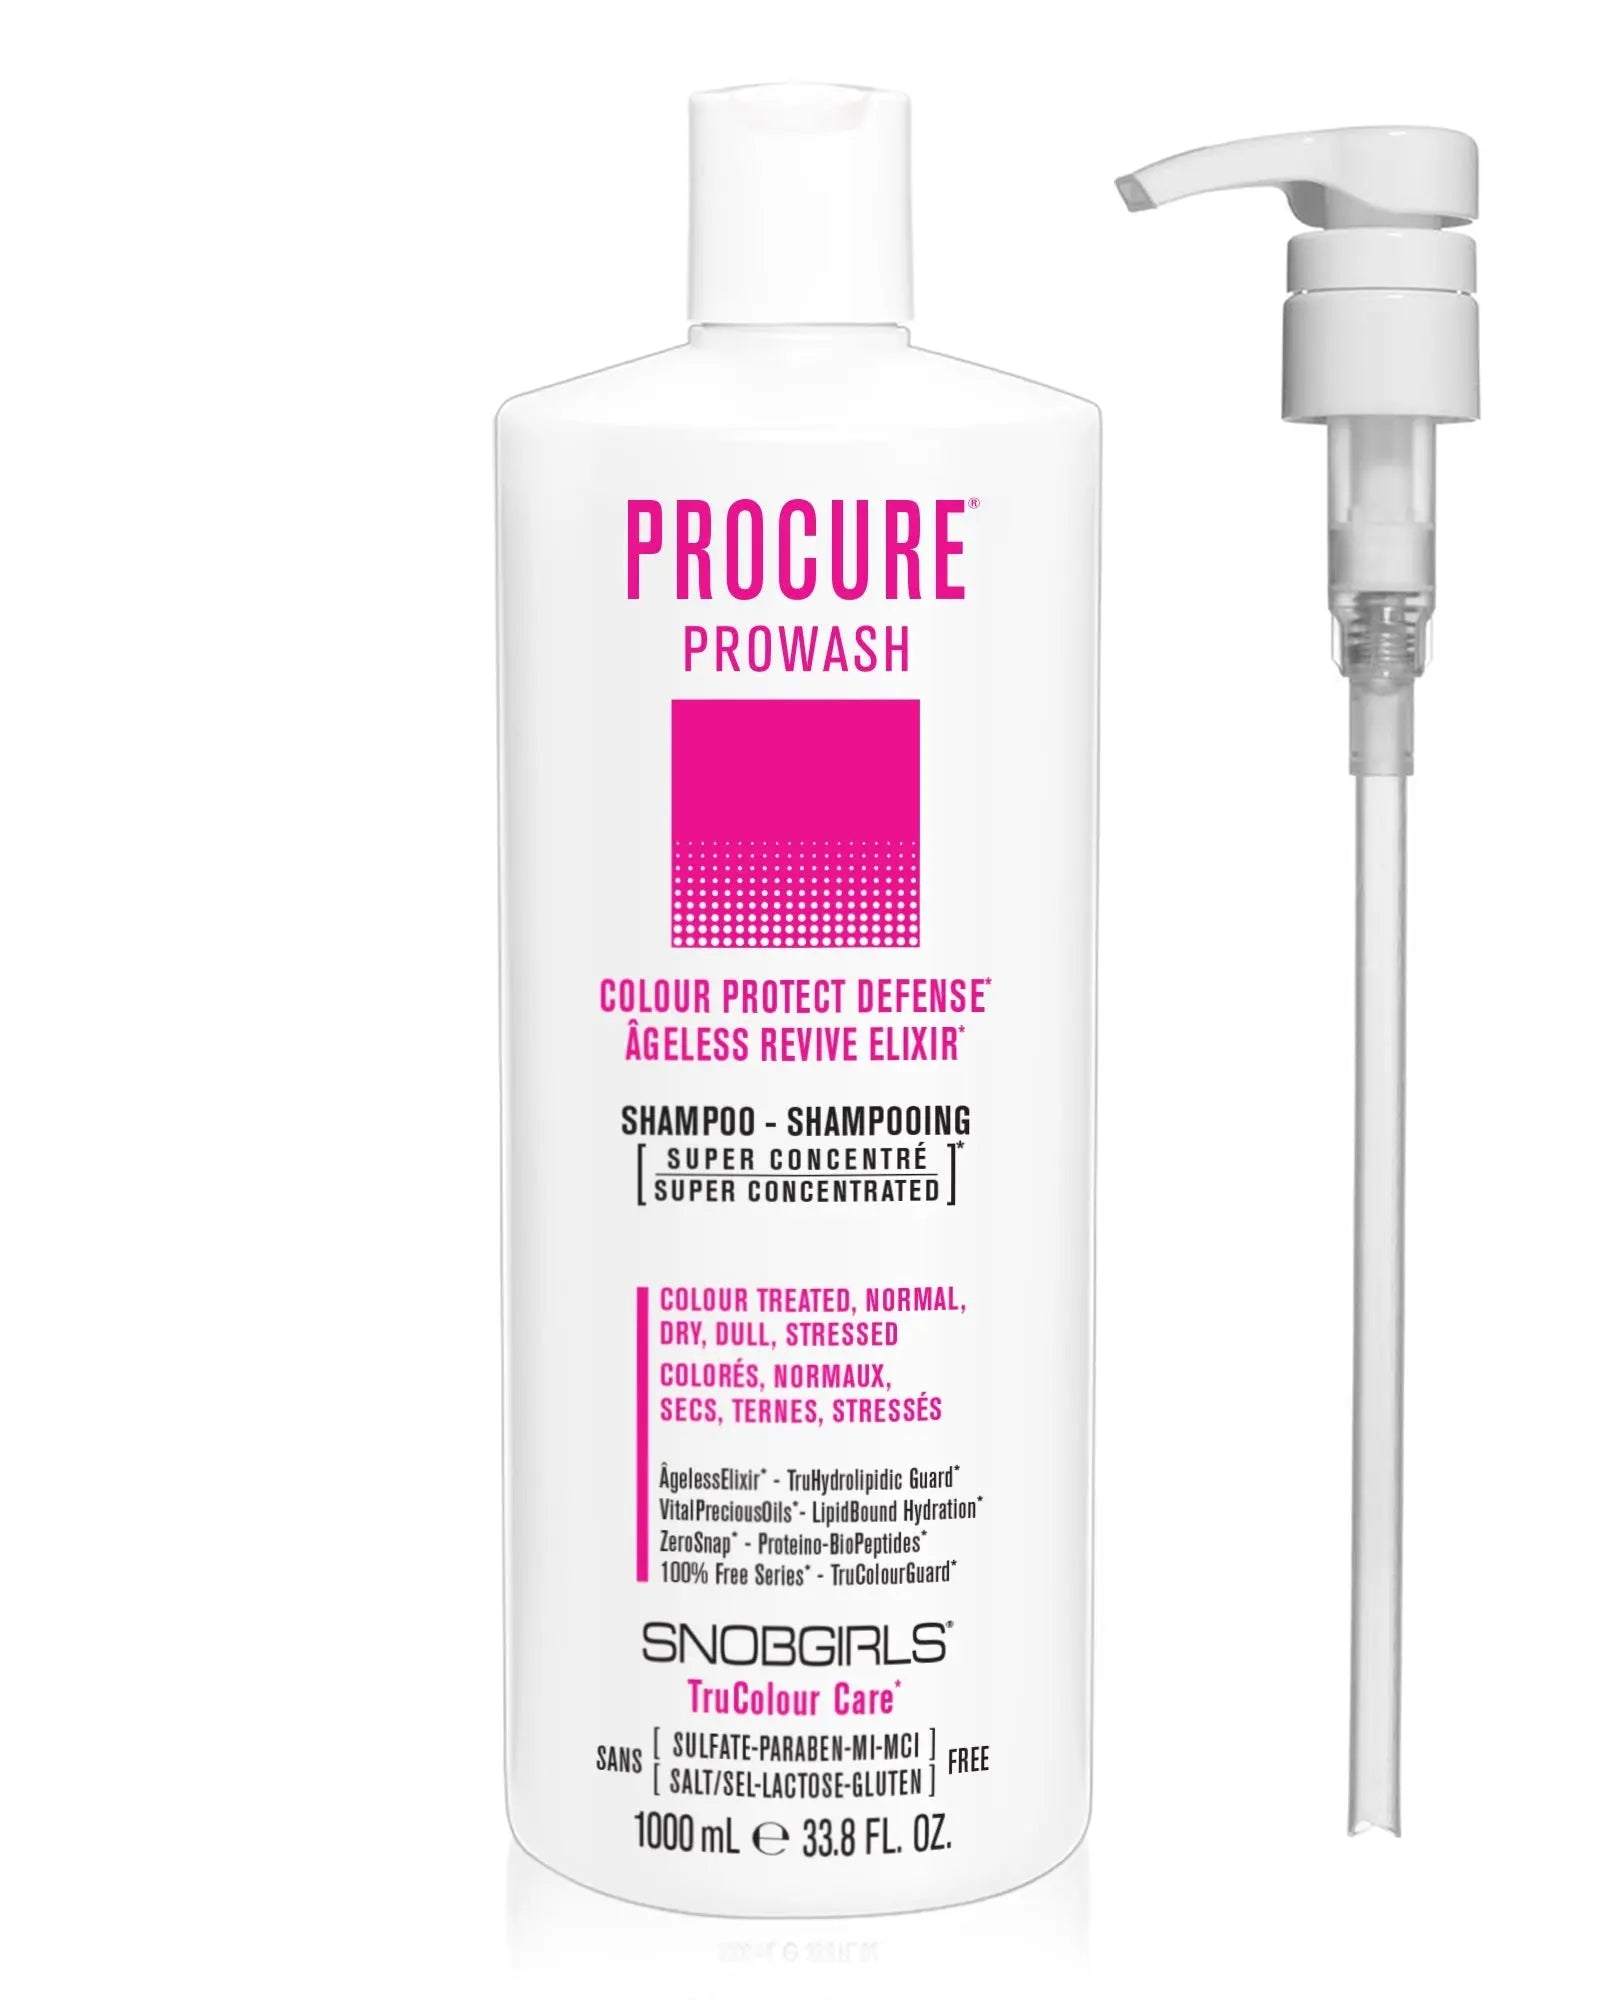 PROCURE Prowash (shampoo) 33.8 FL. OZ. + Pump - SNOBGIRLS.com